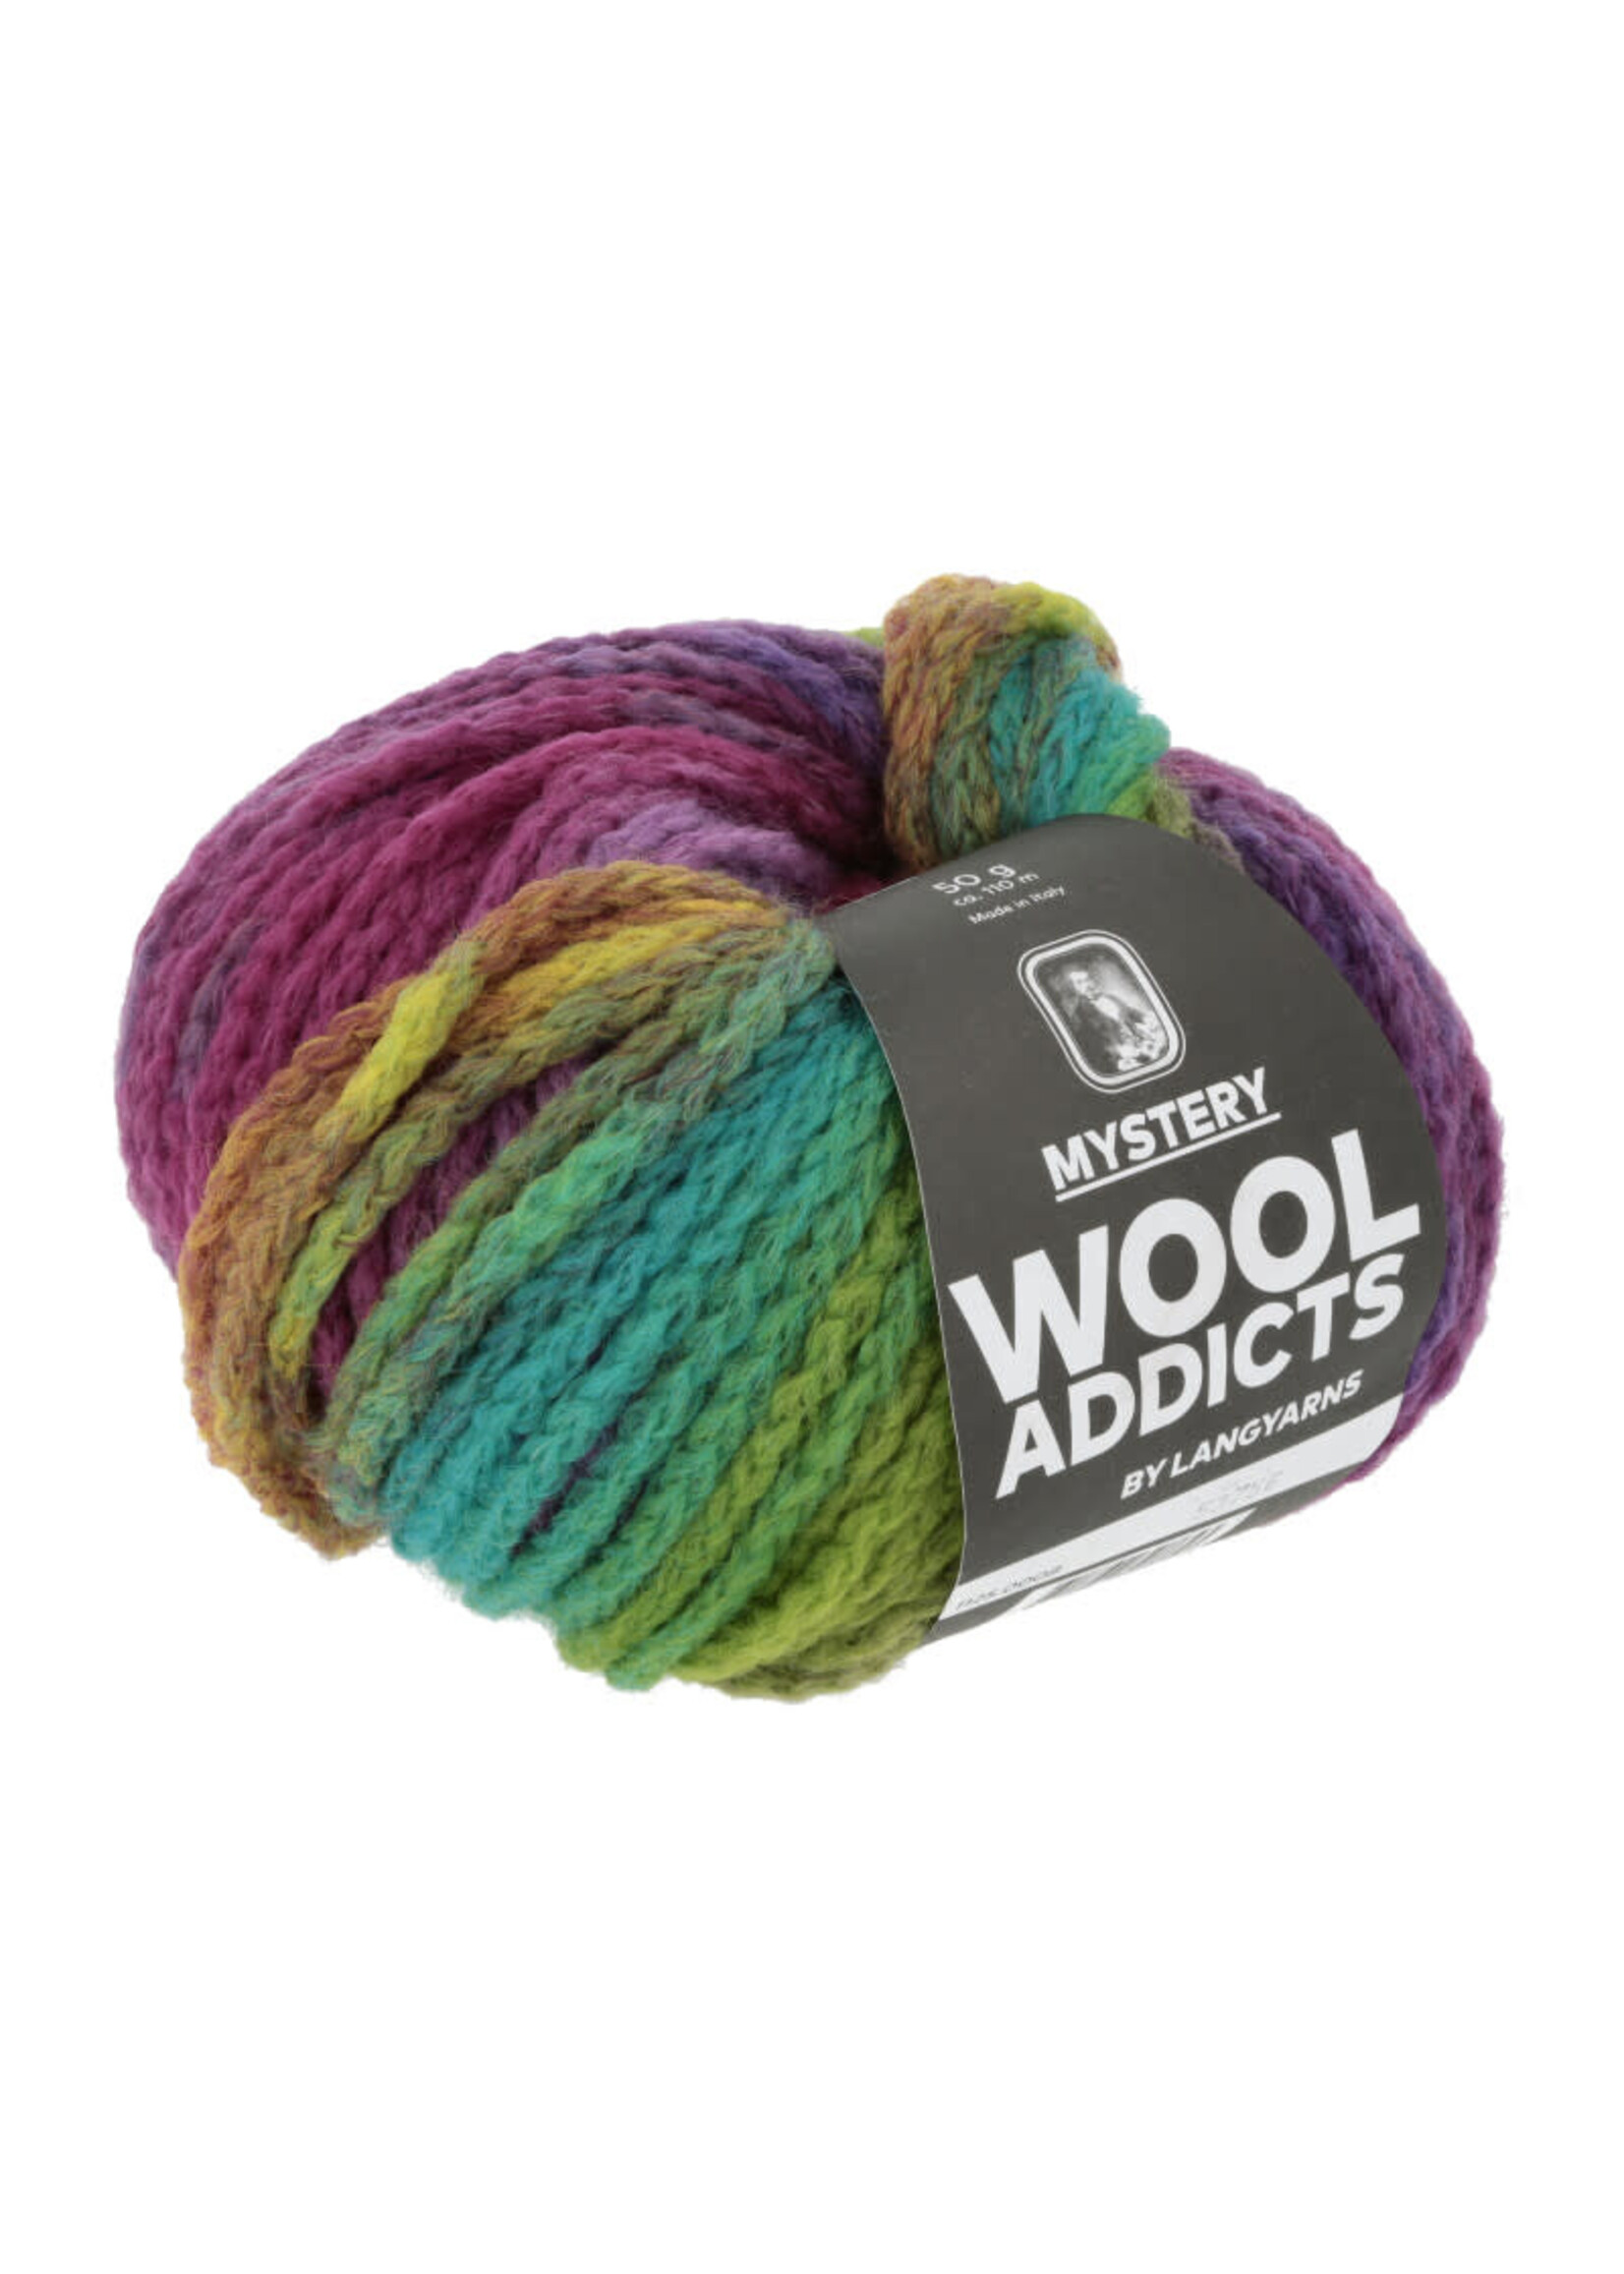 WoolAddicts Mystery - 0008